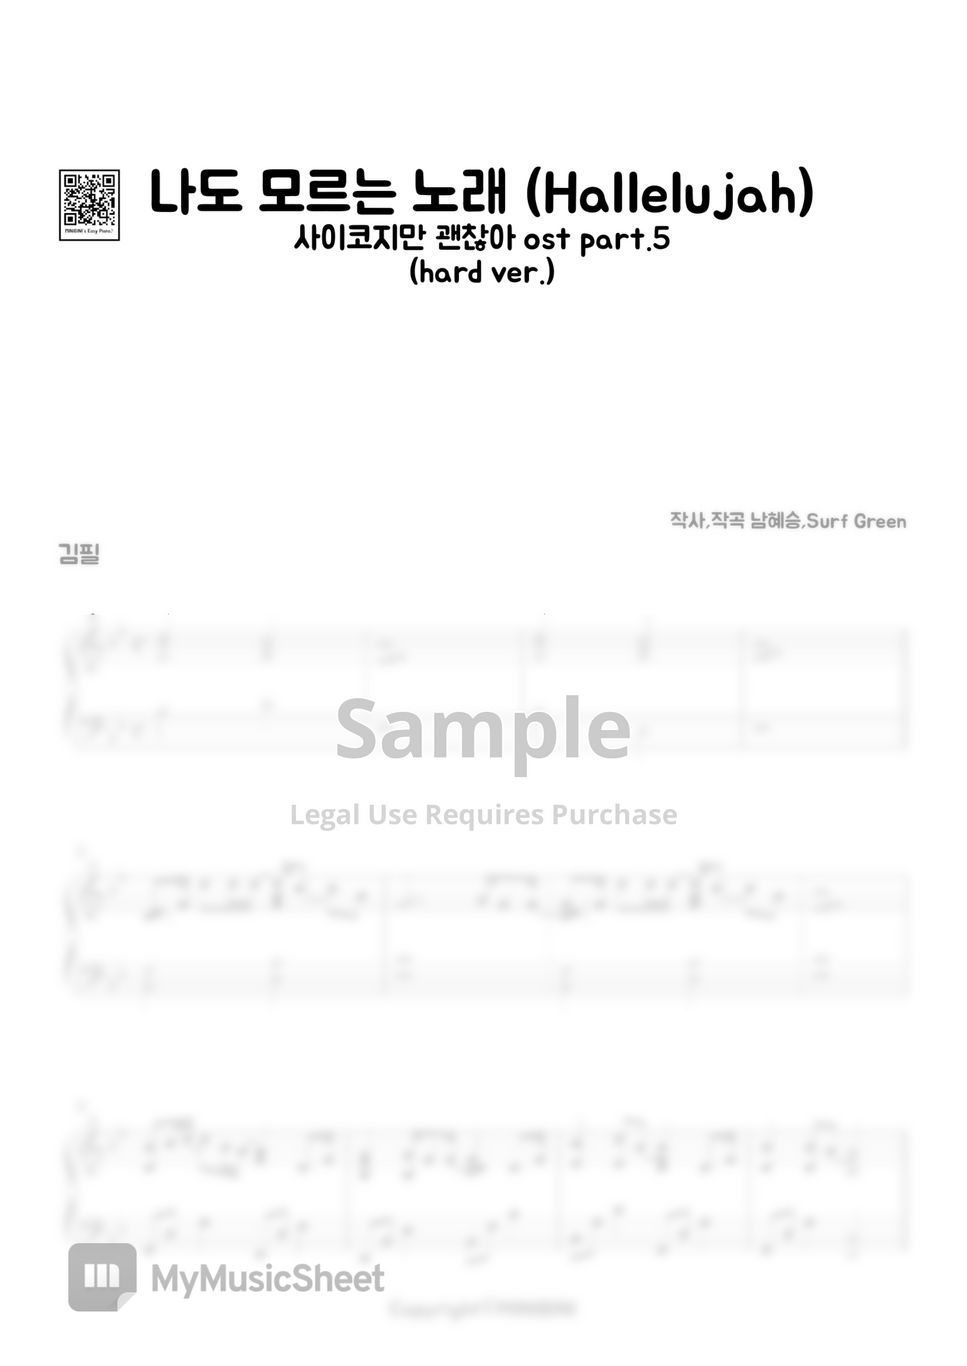 Kim Feel (김필) - Hallelujah (나도 모르는 노래) [사이코지만 괜찮아 OST Pt.5] (Hard Version) by MINIBINI